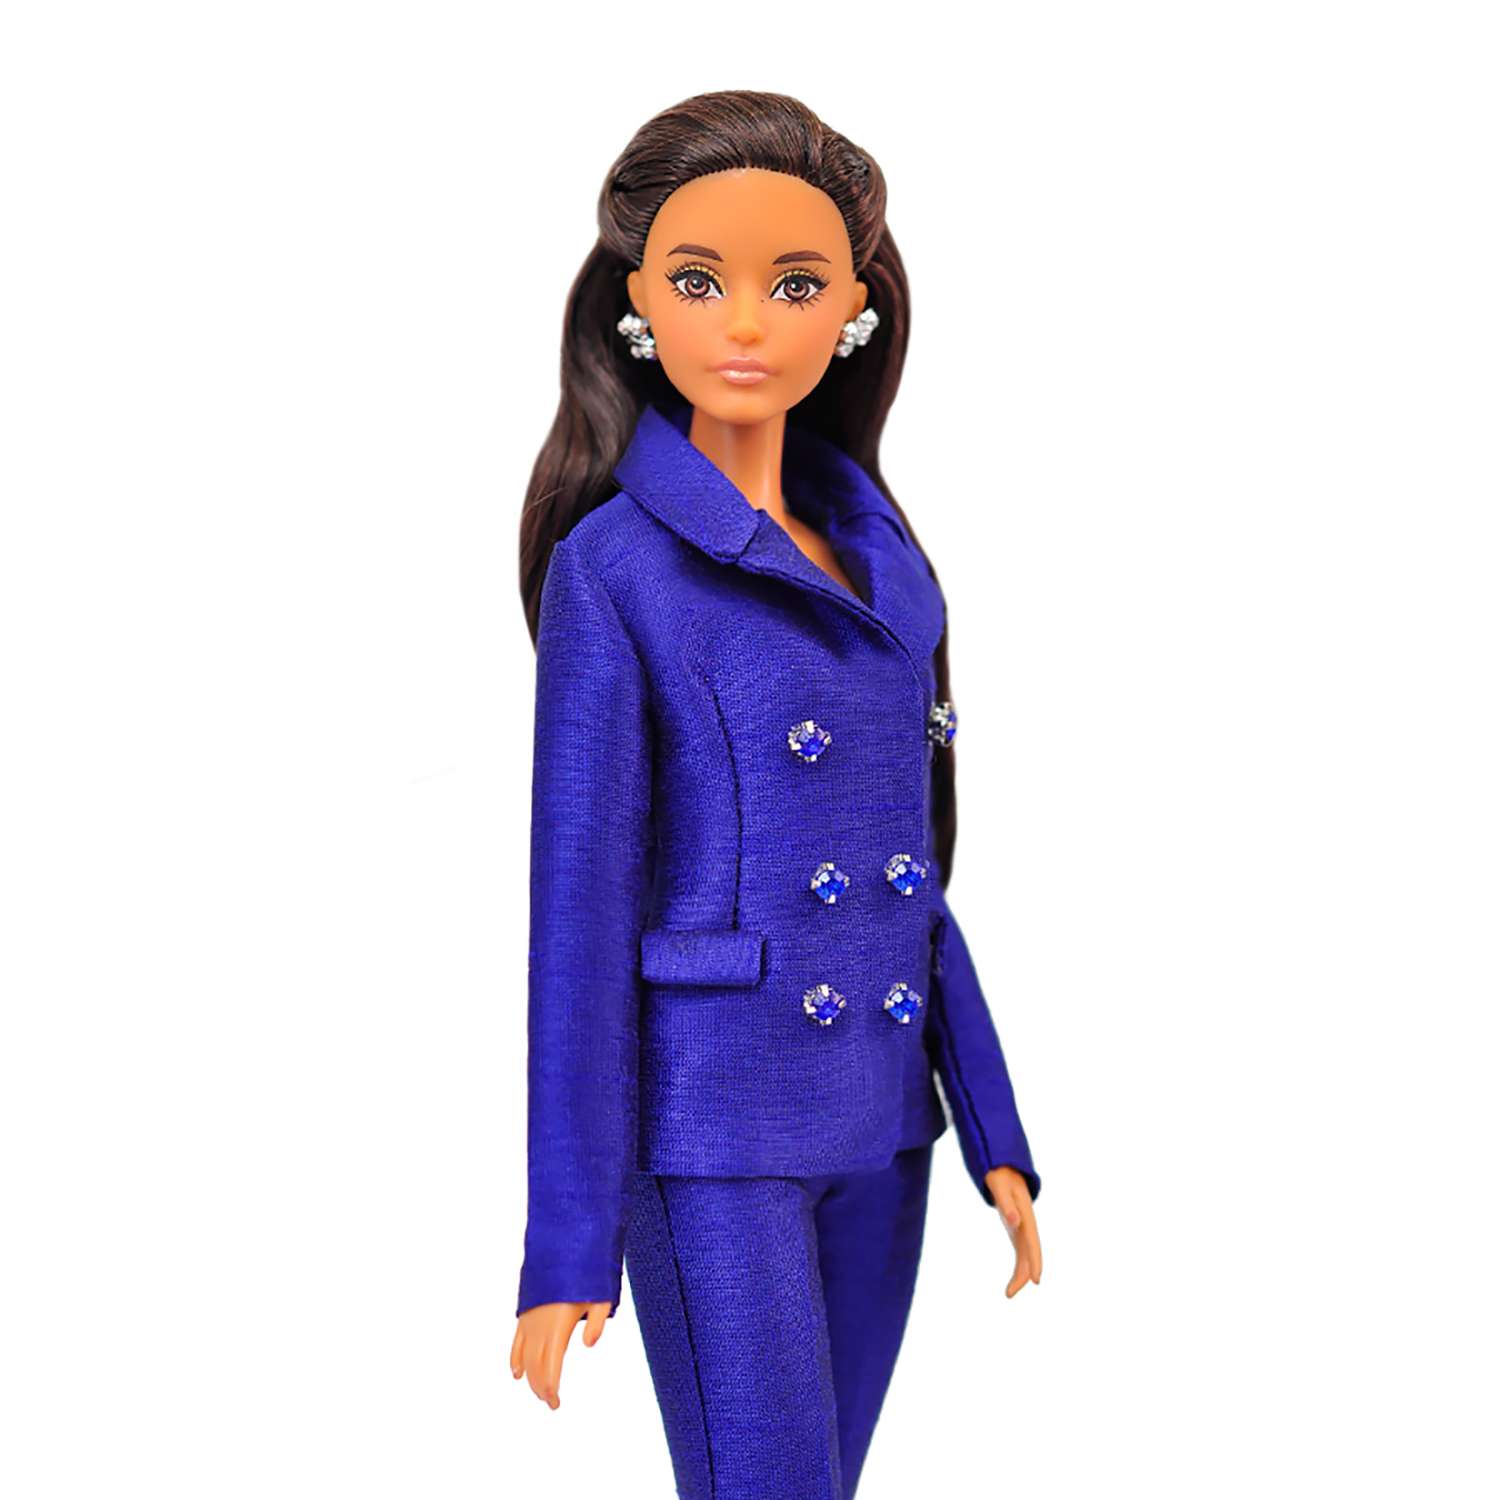 Шелковый брючный костюм Эленприв Синий для куклы 29 см типа Барби FA-011-01 - фото 4